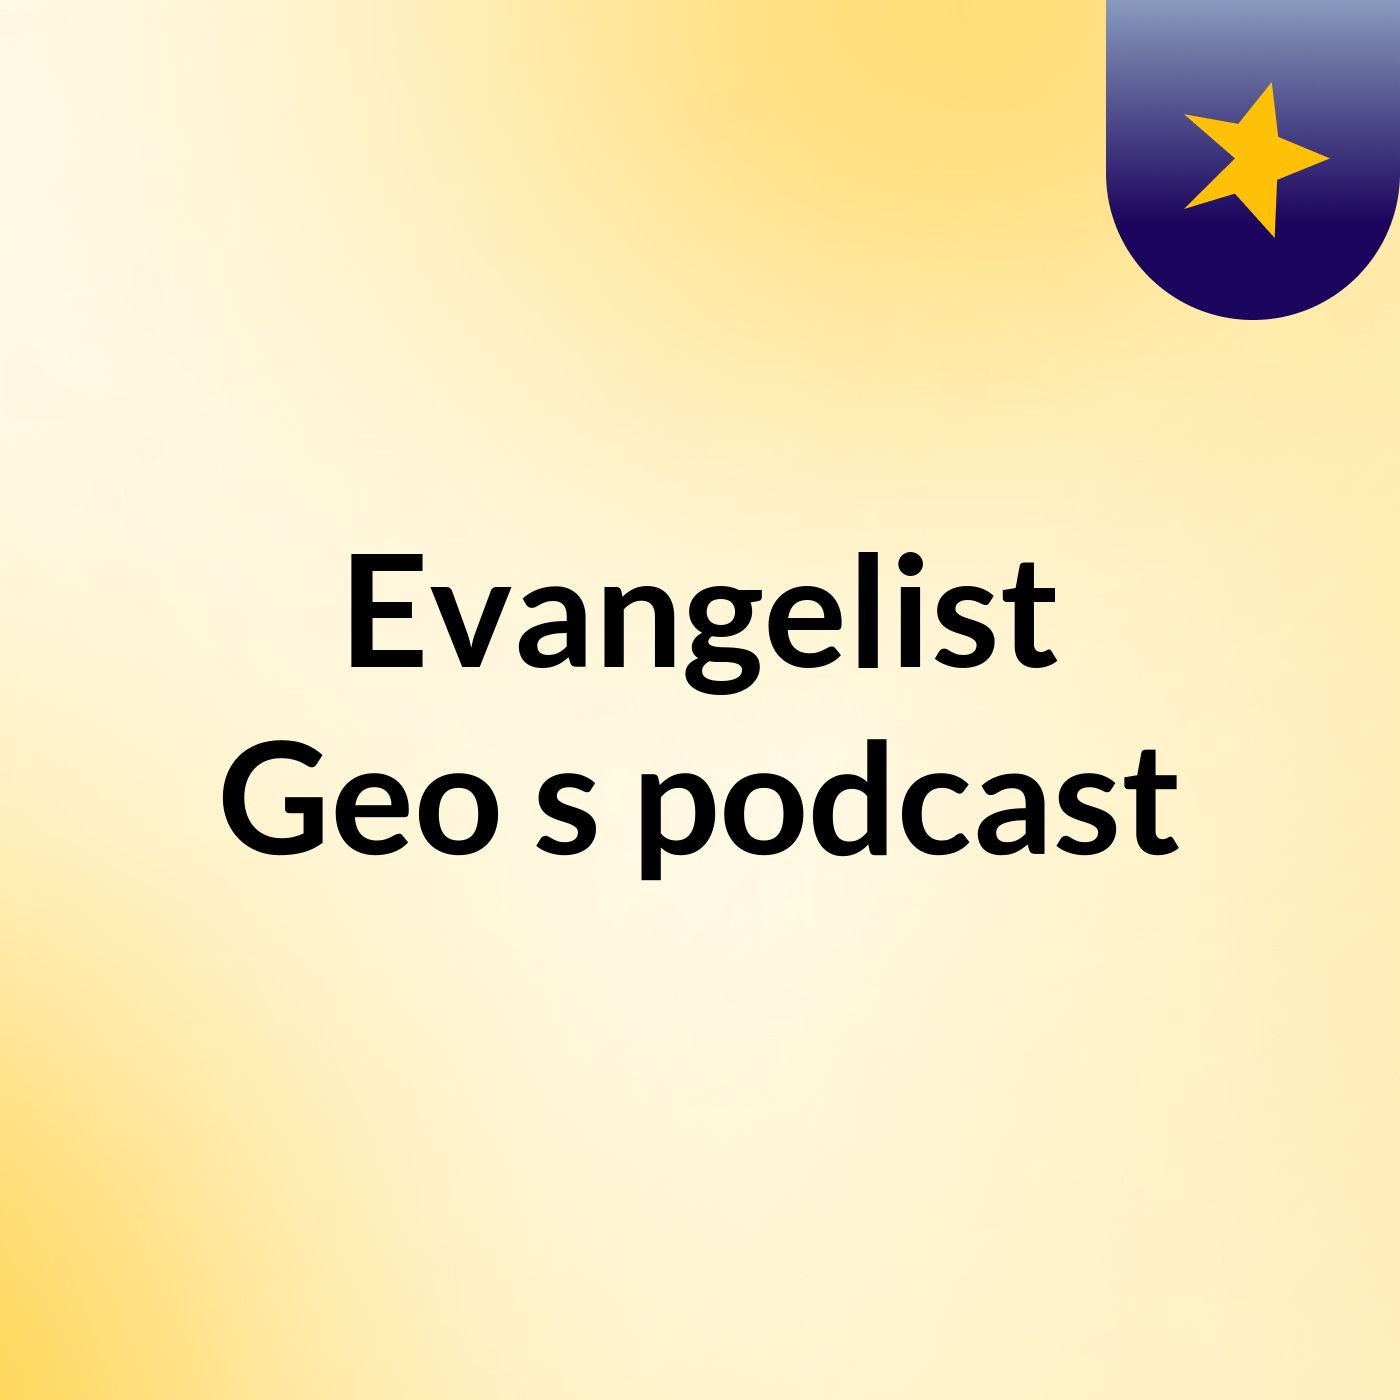 Episode 3 - Evangelist Geo's podcast